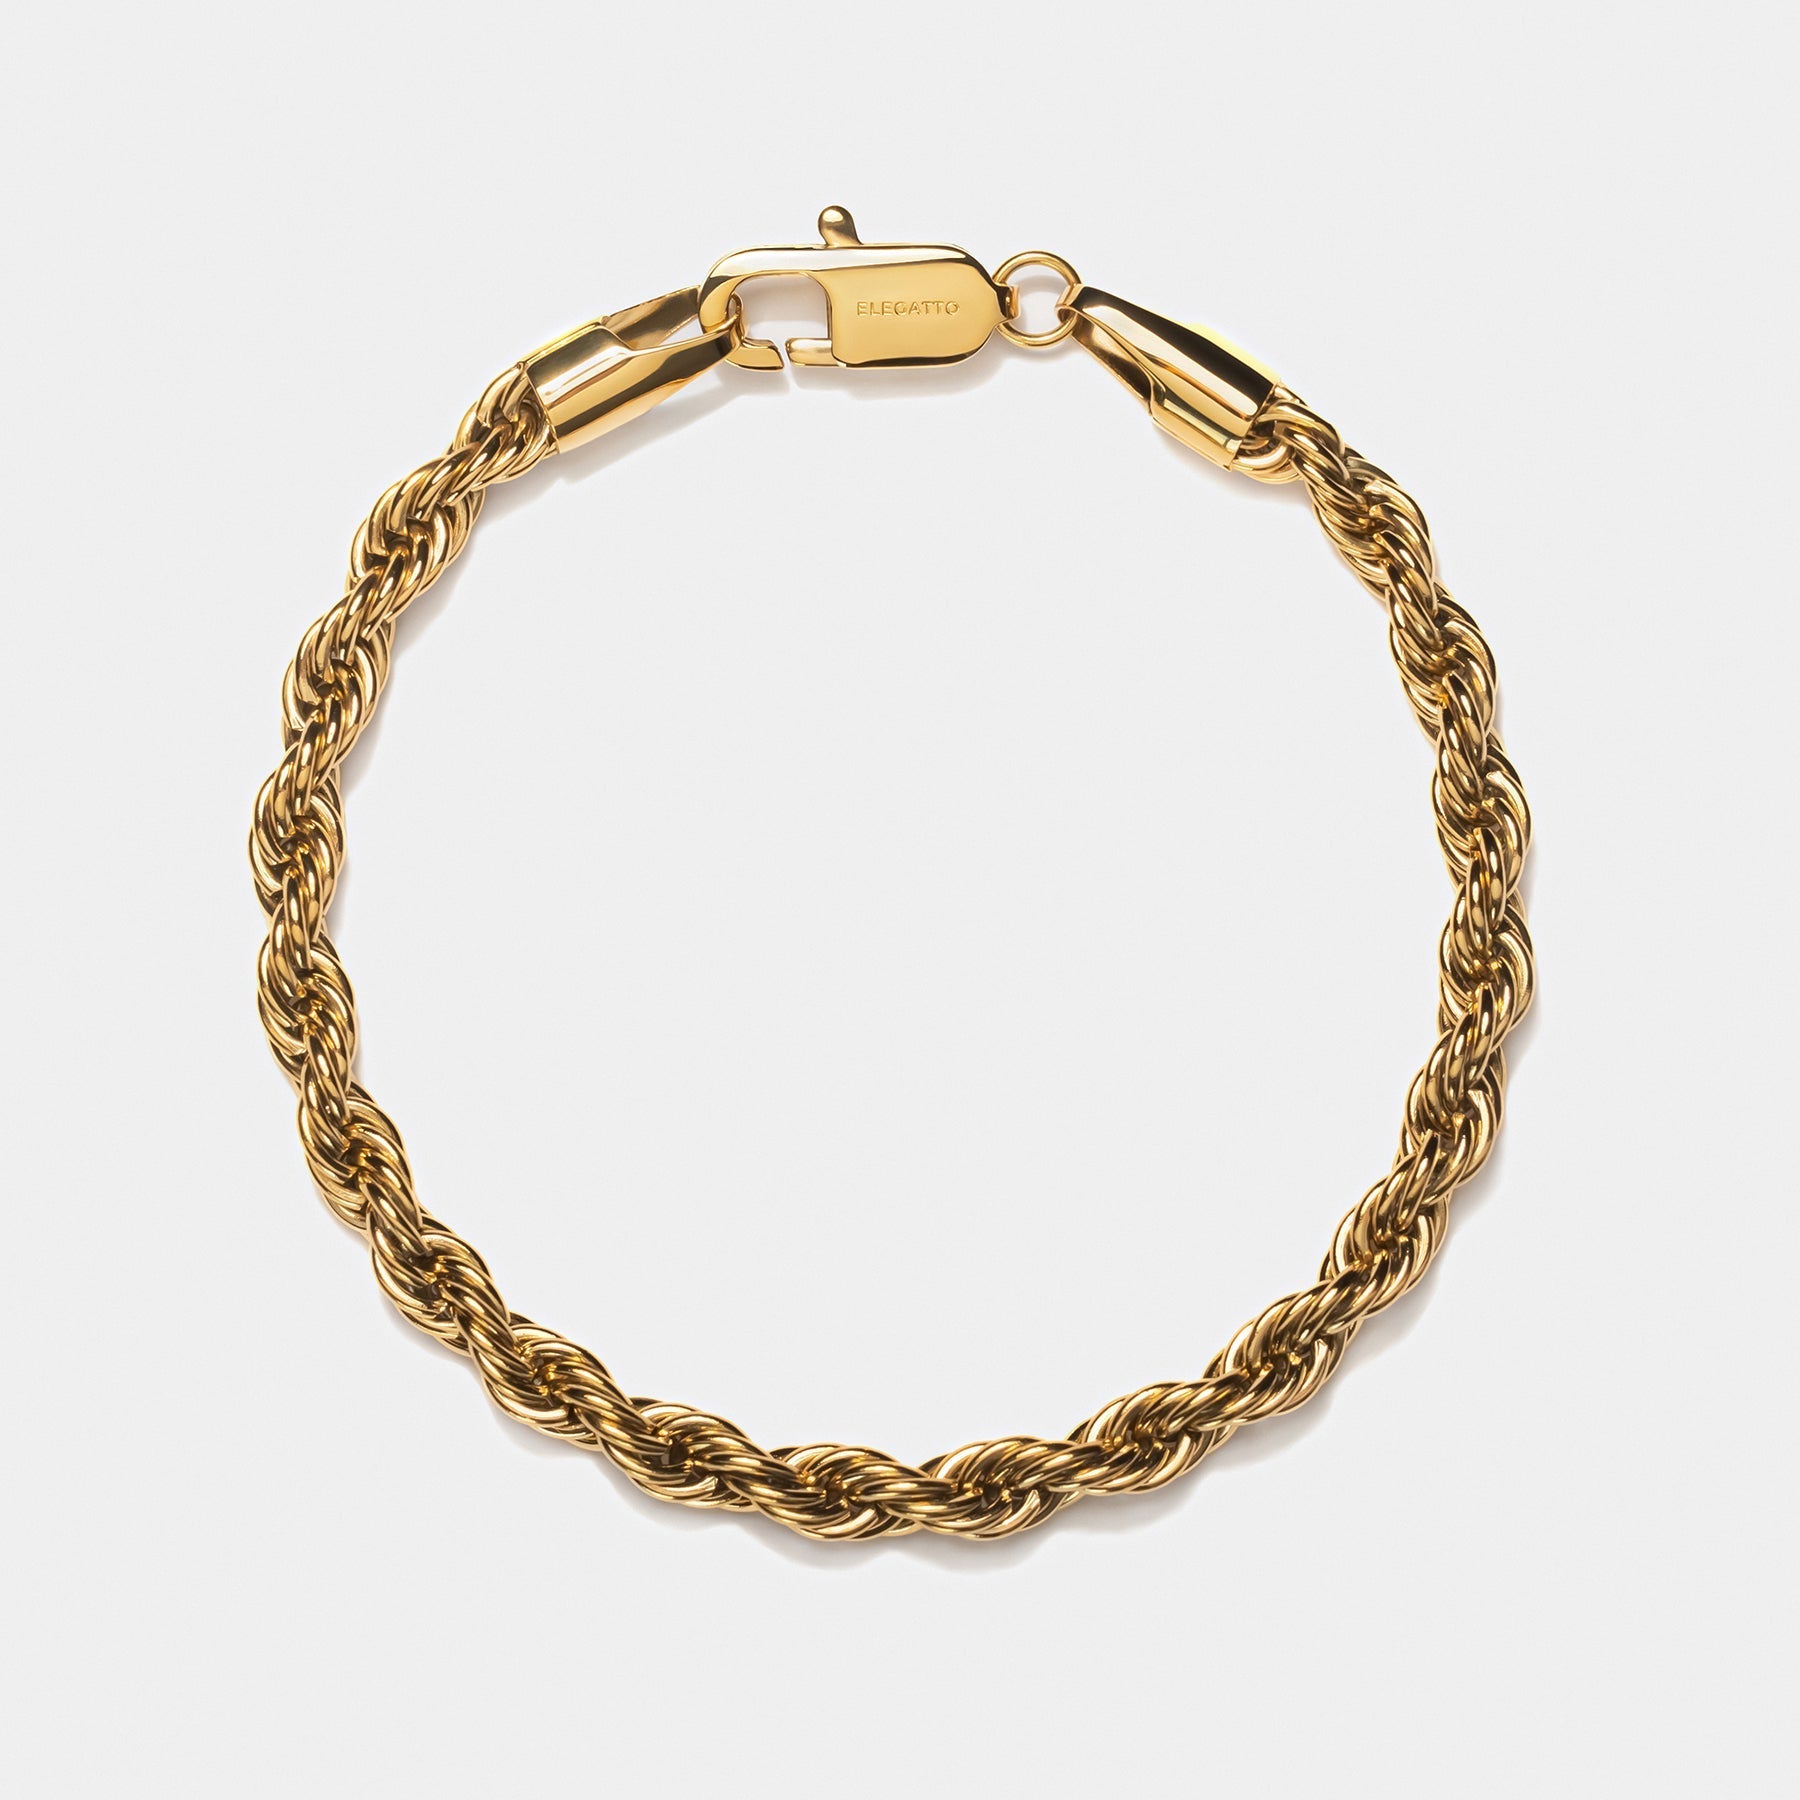 Rope Chain Bracelet Gold W - Elegatto